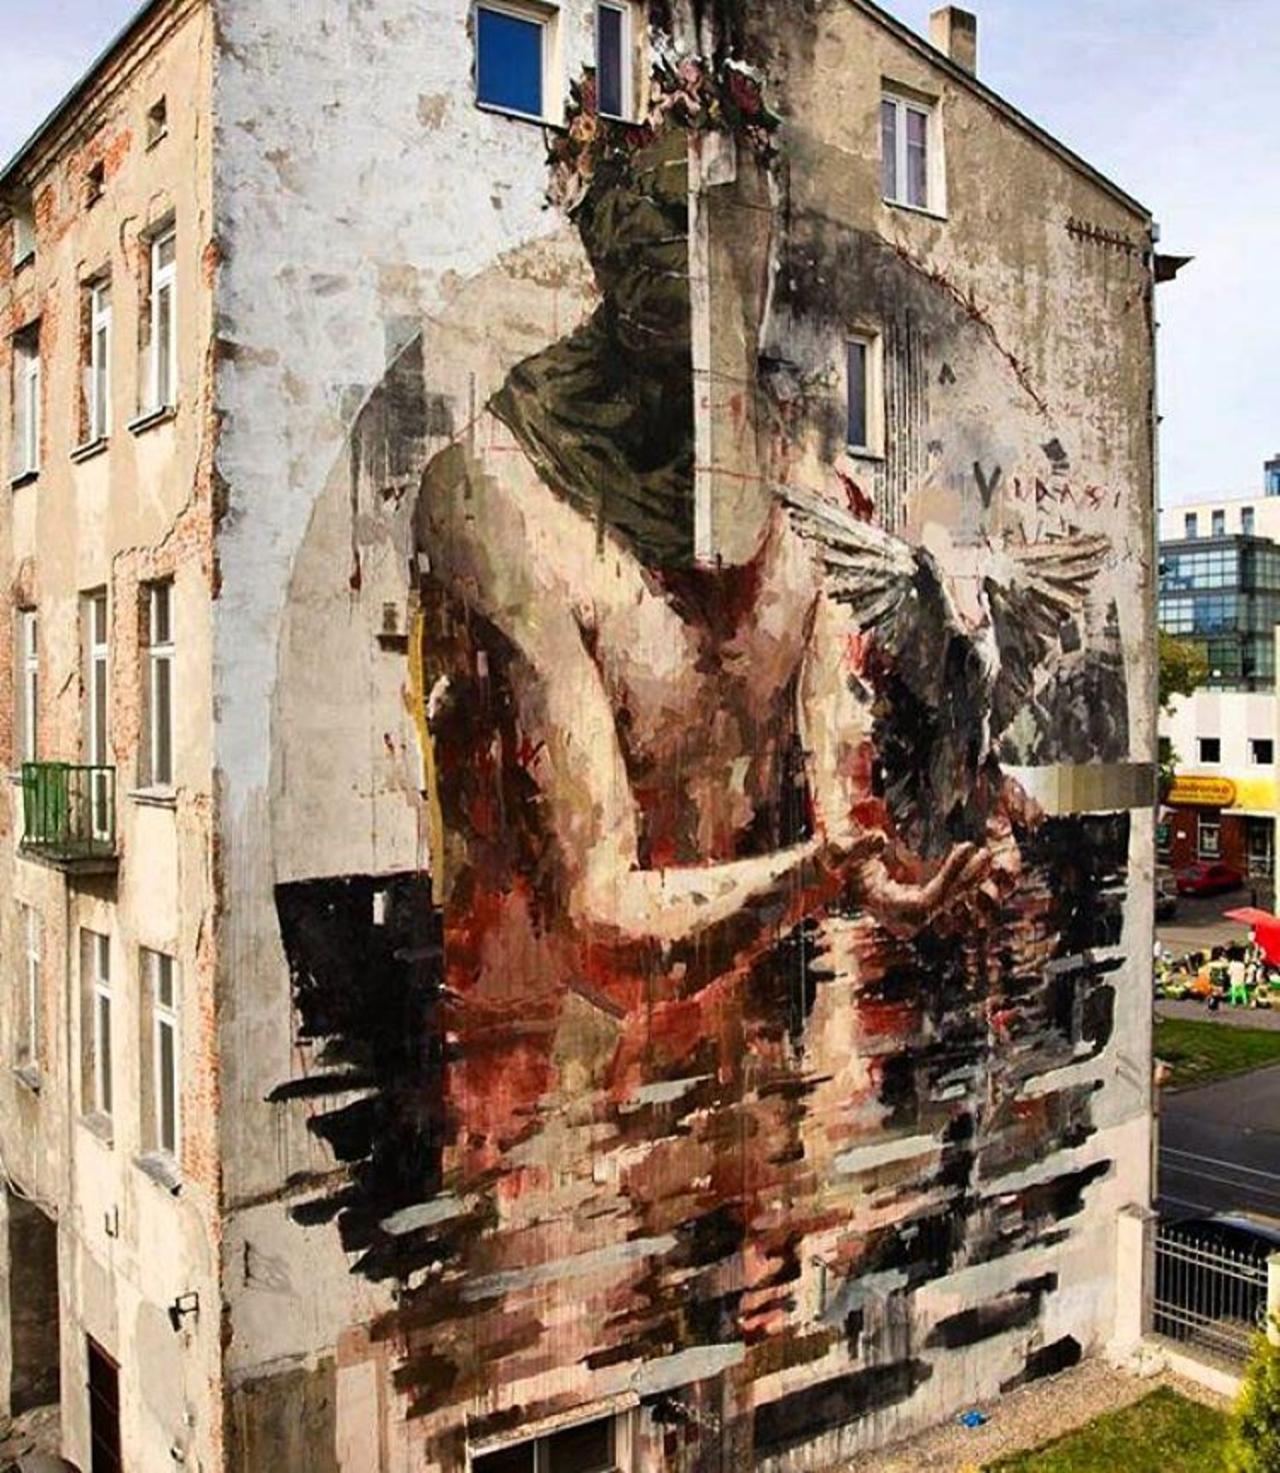 Borondo unveils a new mural in Lodz, Poland for LodzMurals. #StreetArt #Graffiti #Mural http://t.co/HYbnGcZYbJ